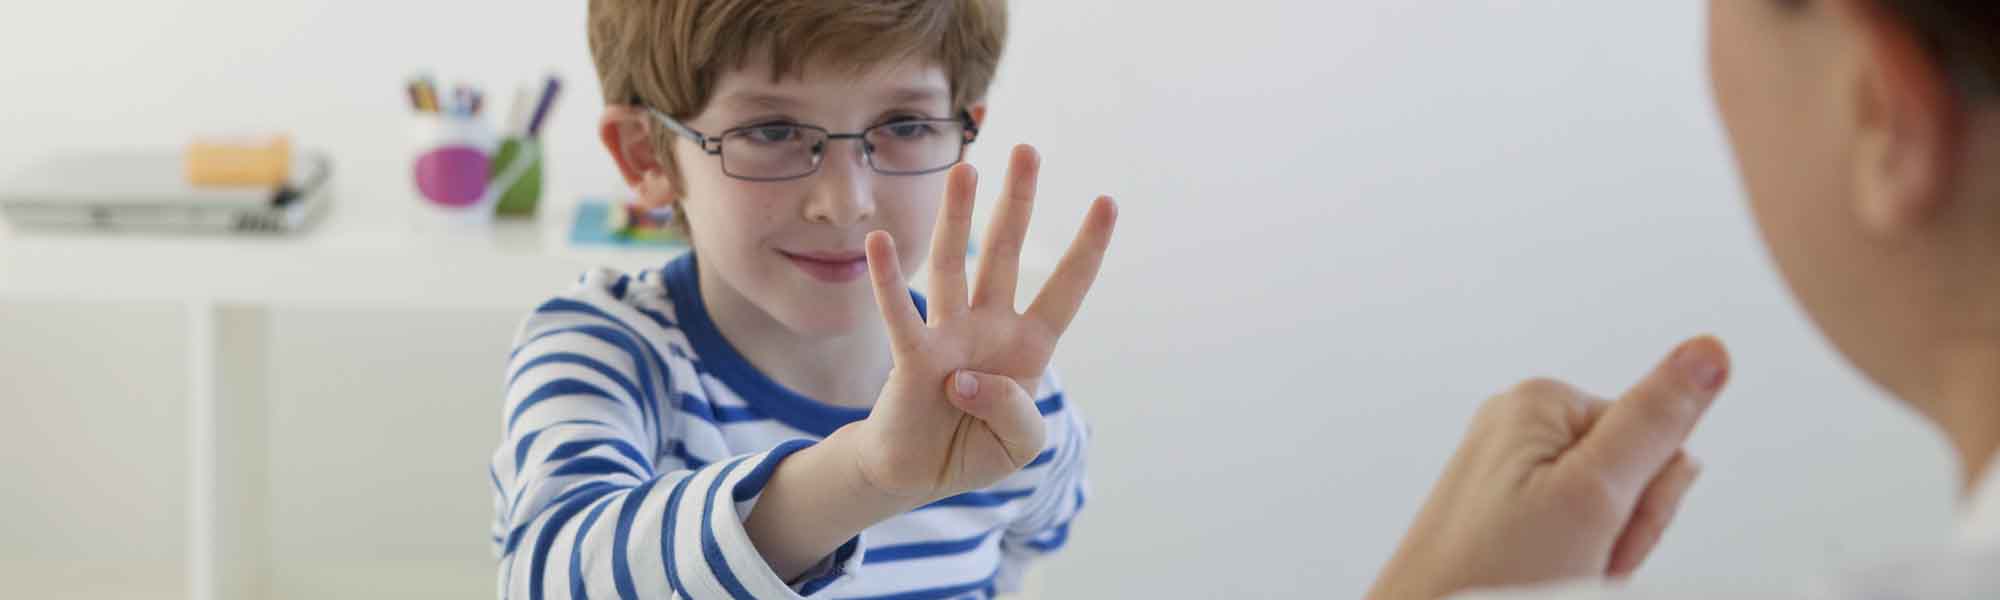 Speech therapist with child signalling hand gestures